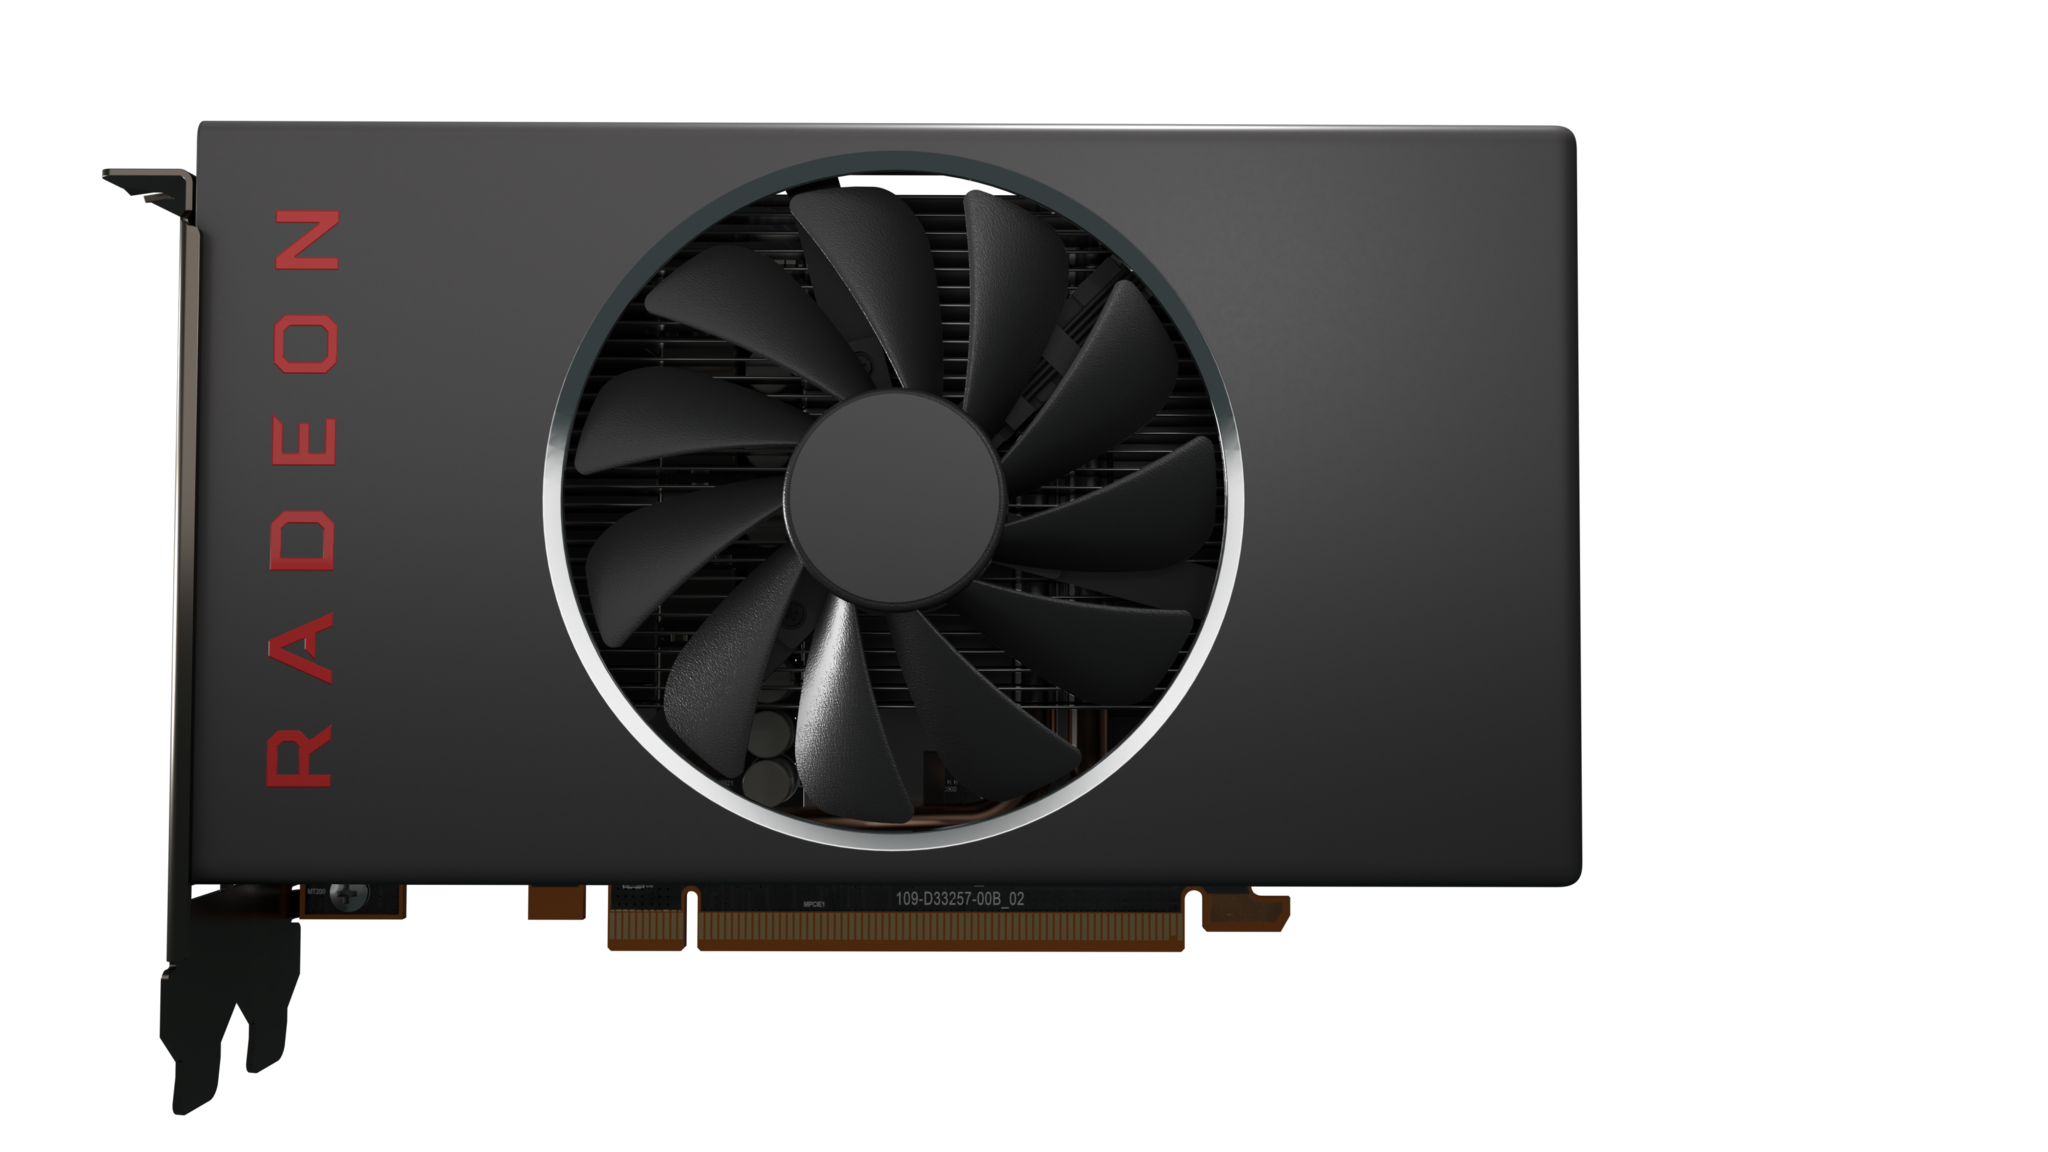 5 AMD เปิดตัวกราฟิกการ์ด Radeon™ RX 5500 Series: ความคมชัดของภาพที่เหนือกว่า ฟีเจอร์การทำงานชั้นเยี่ยม และประสบการณ์การเล่นเกมประสิทธิภาพสูง